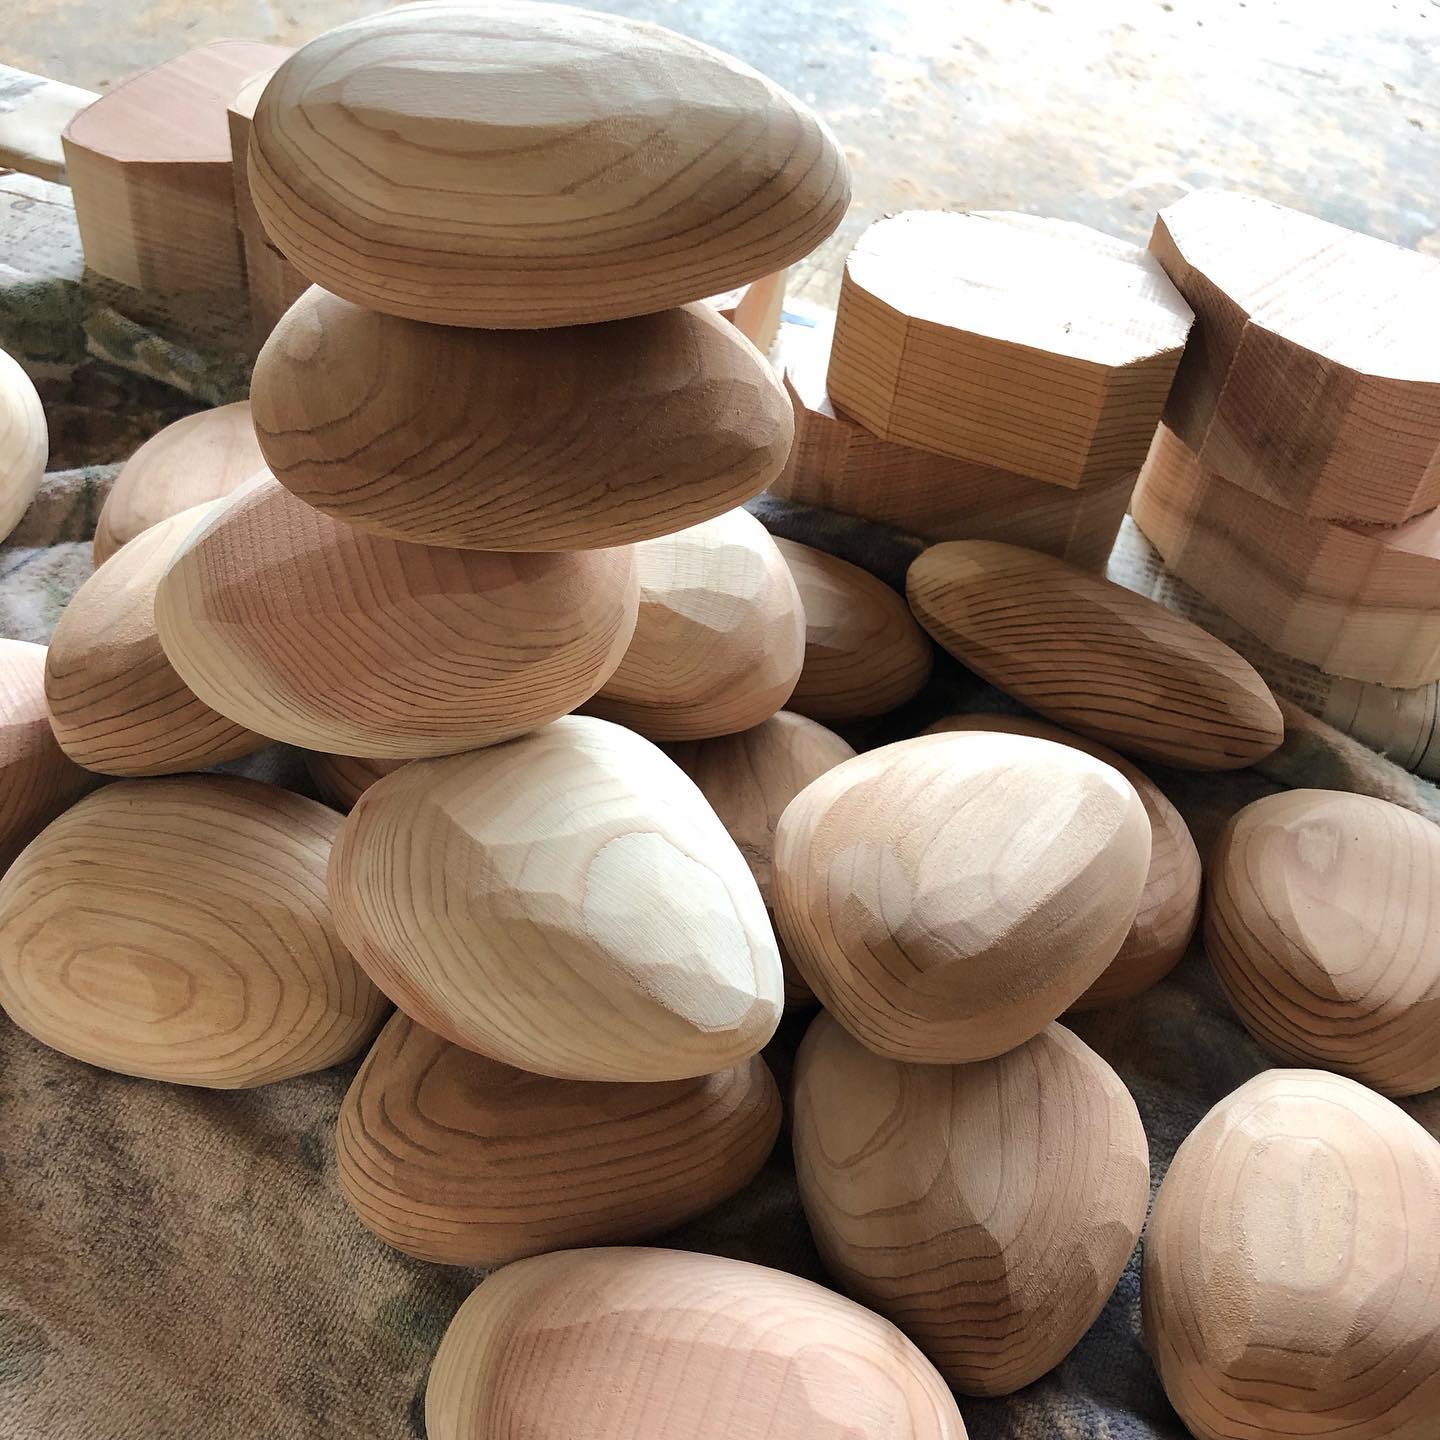 KUKU wood stones製作中#杉のおもちゃ#木頭杉のおもちゃ@woodboardkuku @woodwork_naka @nakawood